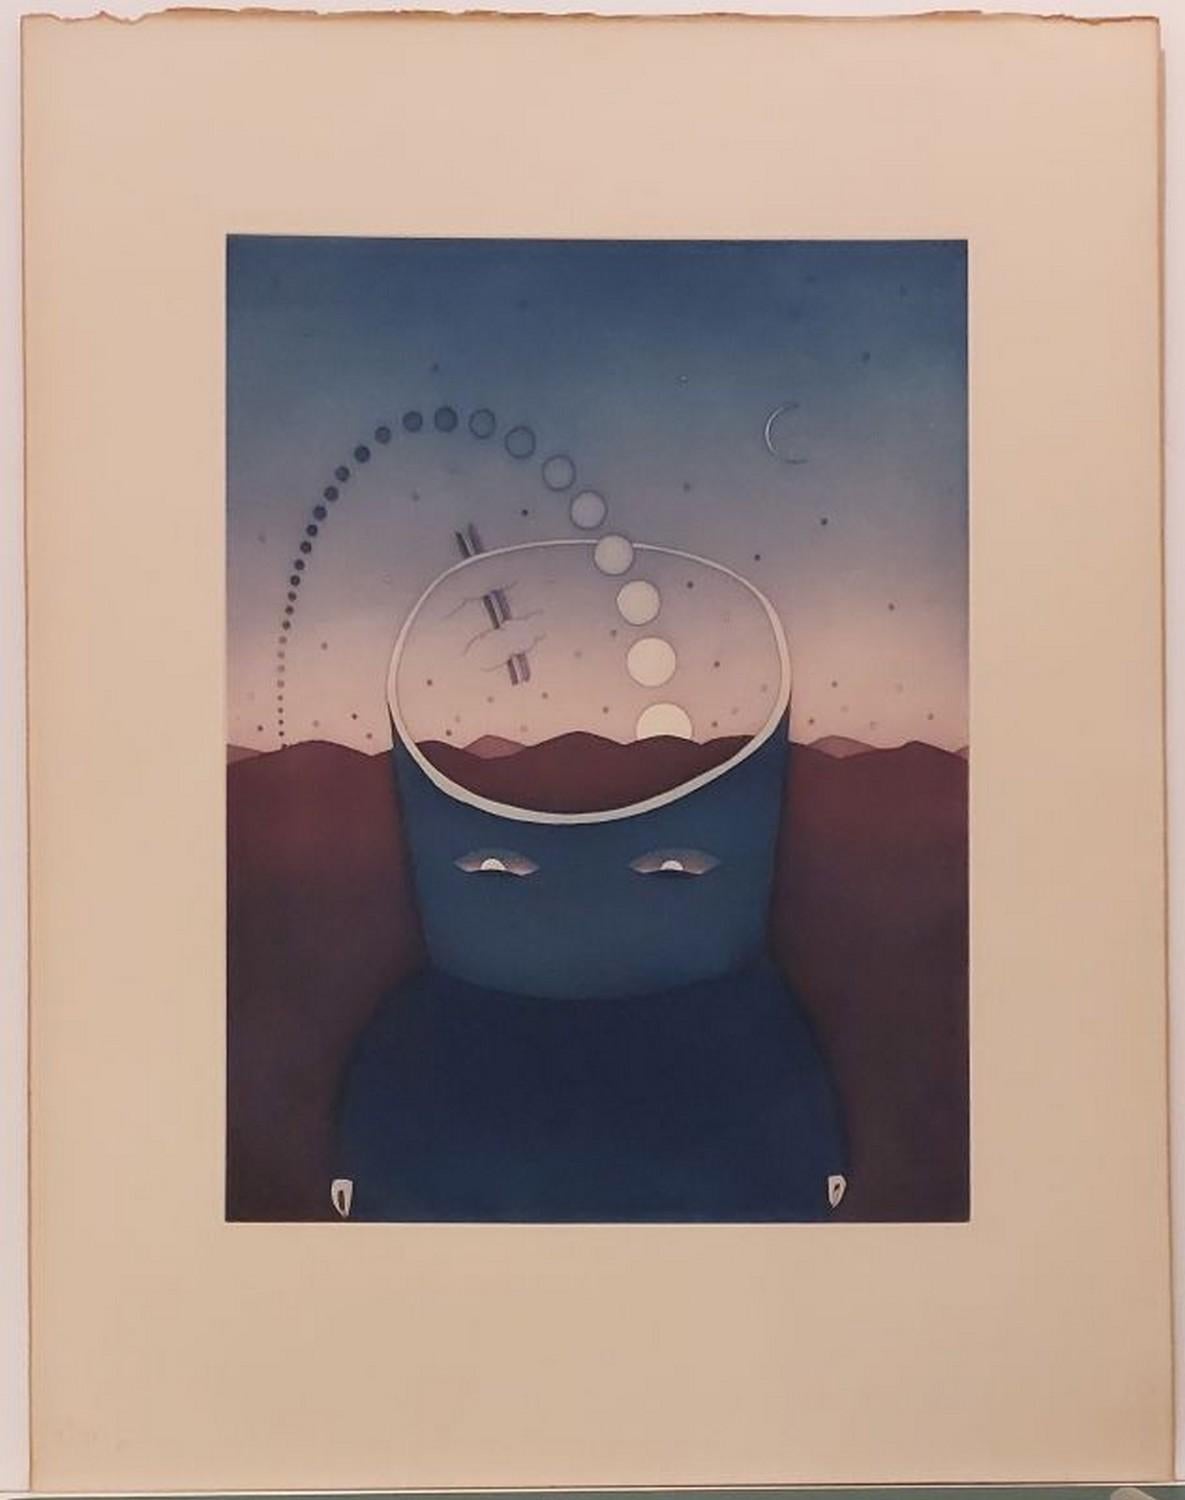 Jean Michel Folon Abstract Print - Moon phase man 